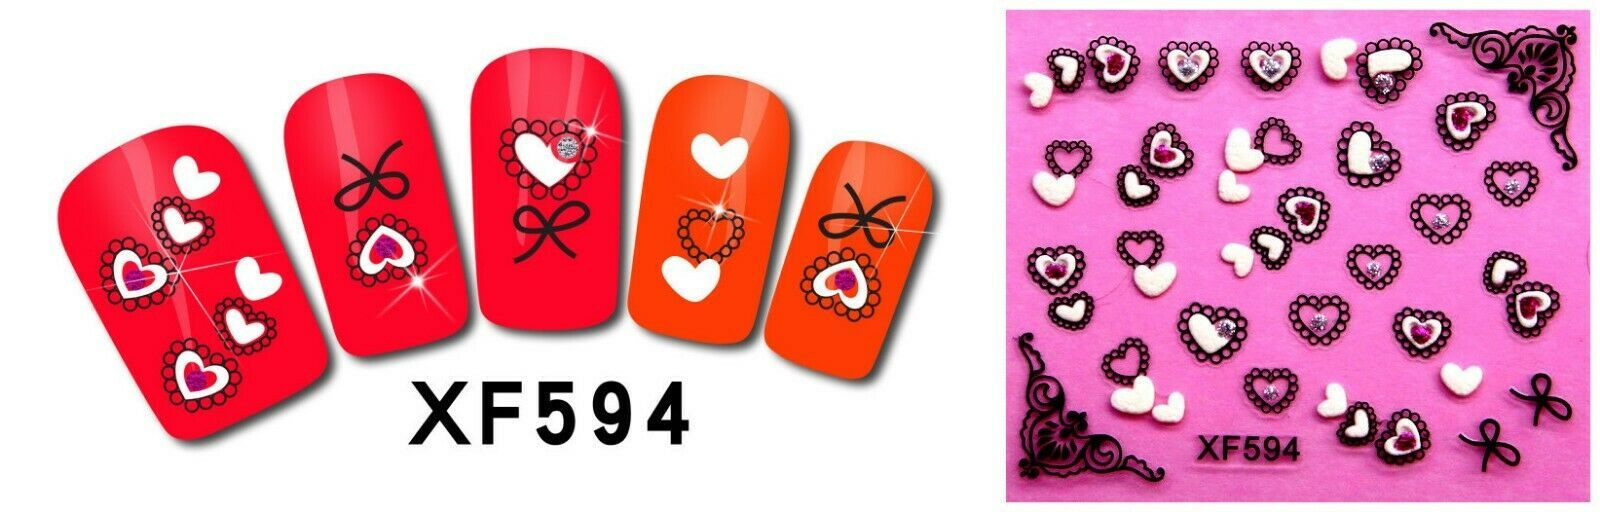 Nail Art 3D Stickers Stones Design Decoration Tips Heart White Black XF594